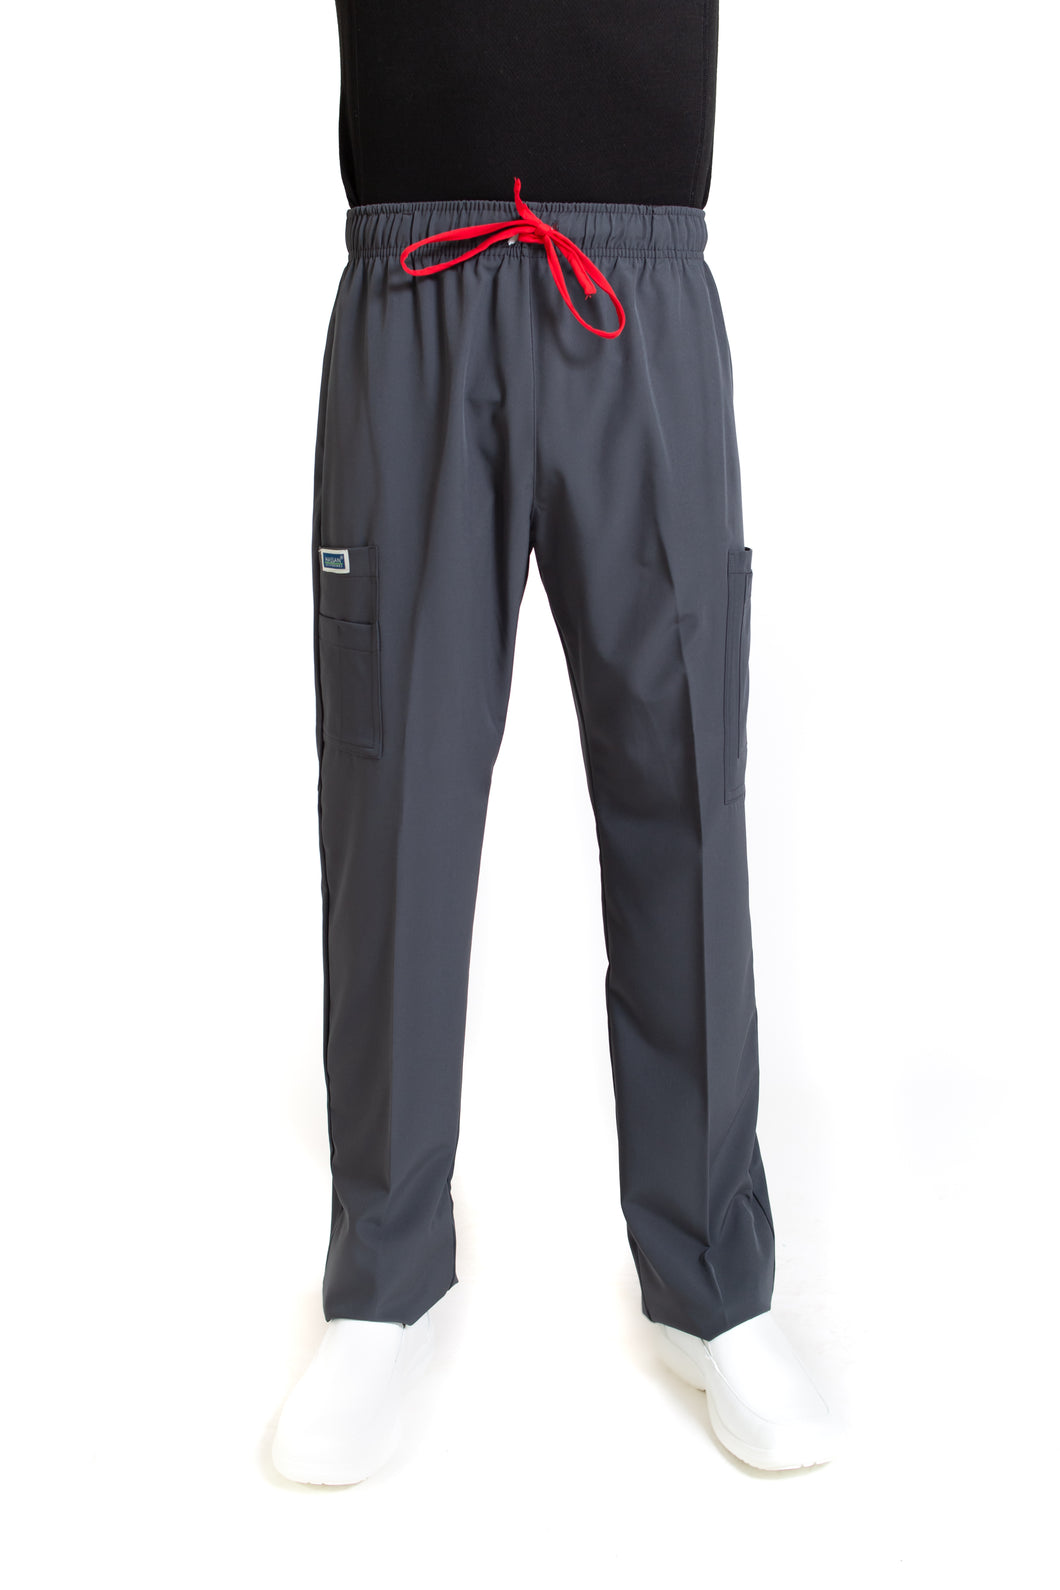 Pantalón Pant EA-02P REPELENTE A FLUIDOS-Color PEWTER/ROJO HOMBRE-HASSAN Uniformes